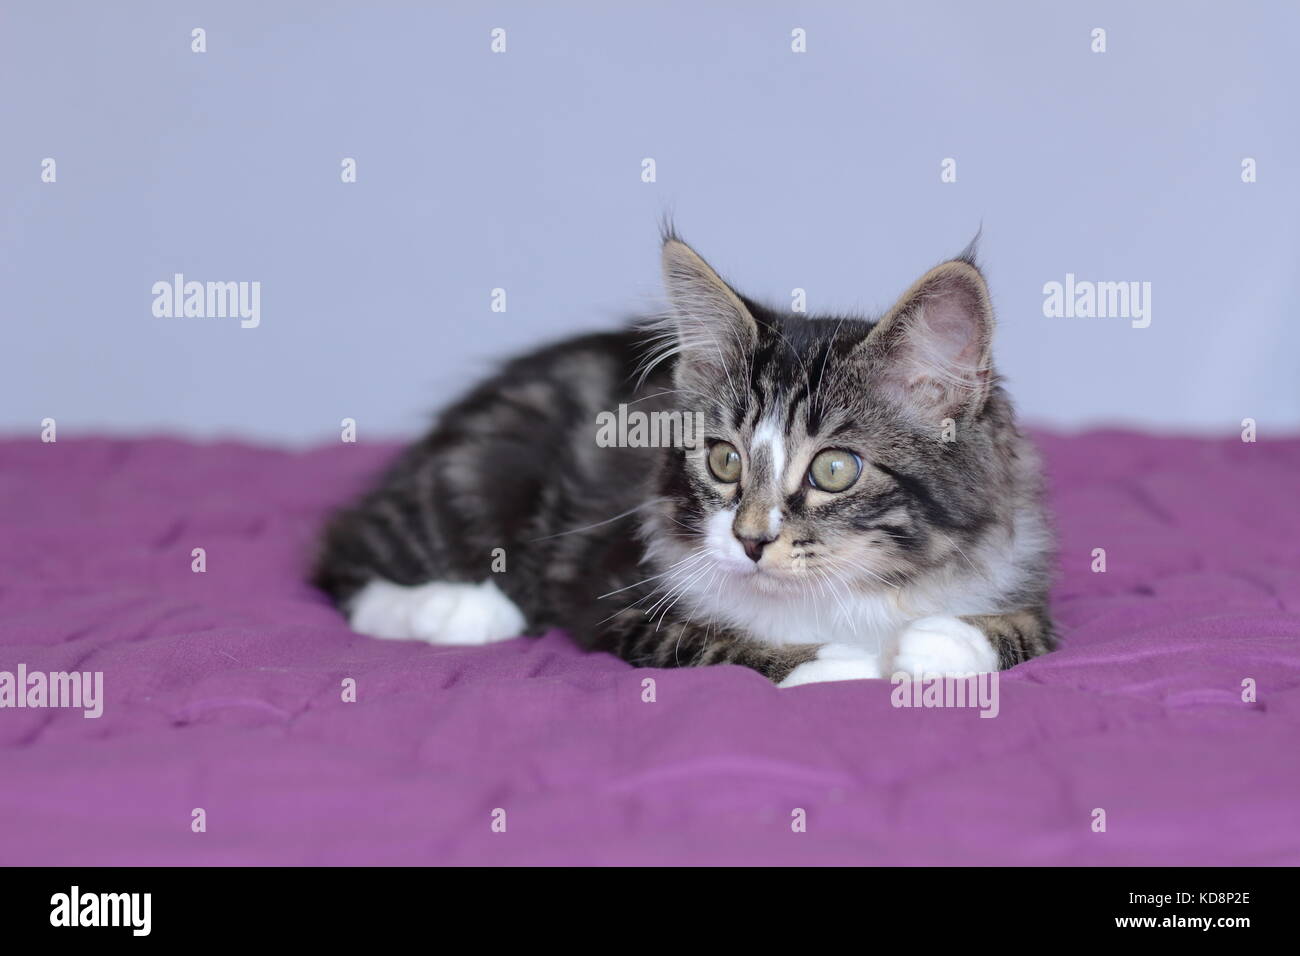 small kitten maine coon in lying on a purple duvet Stock Photo